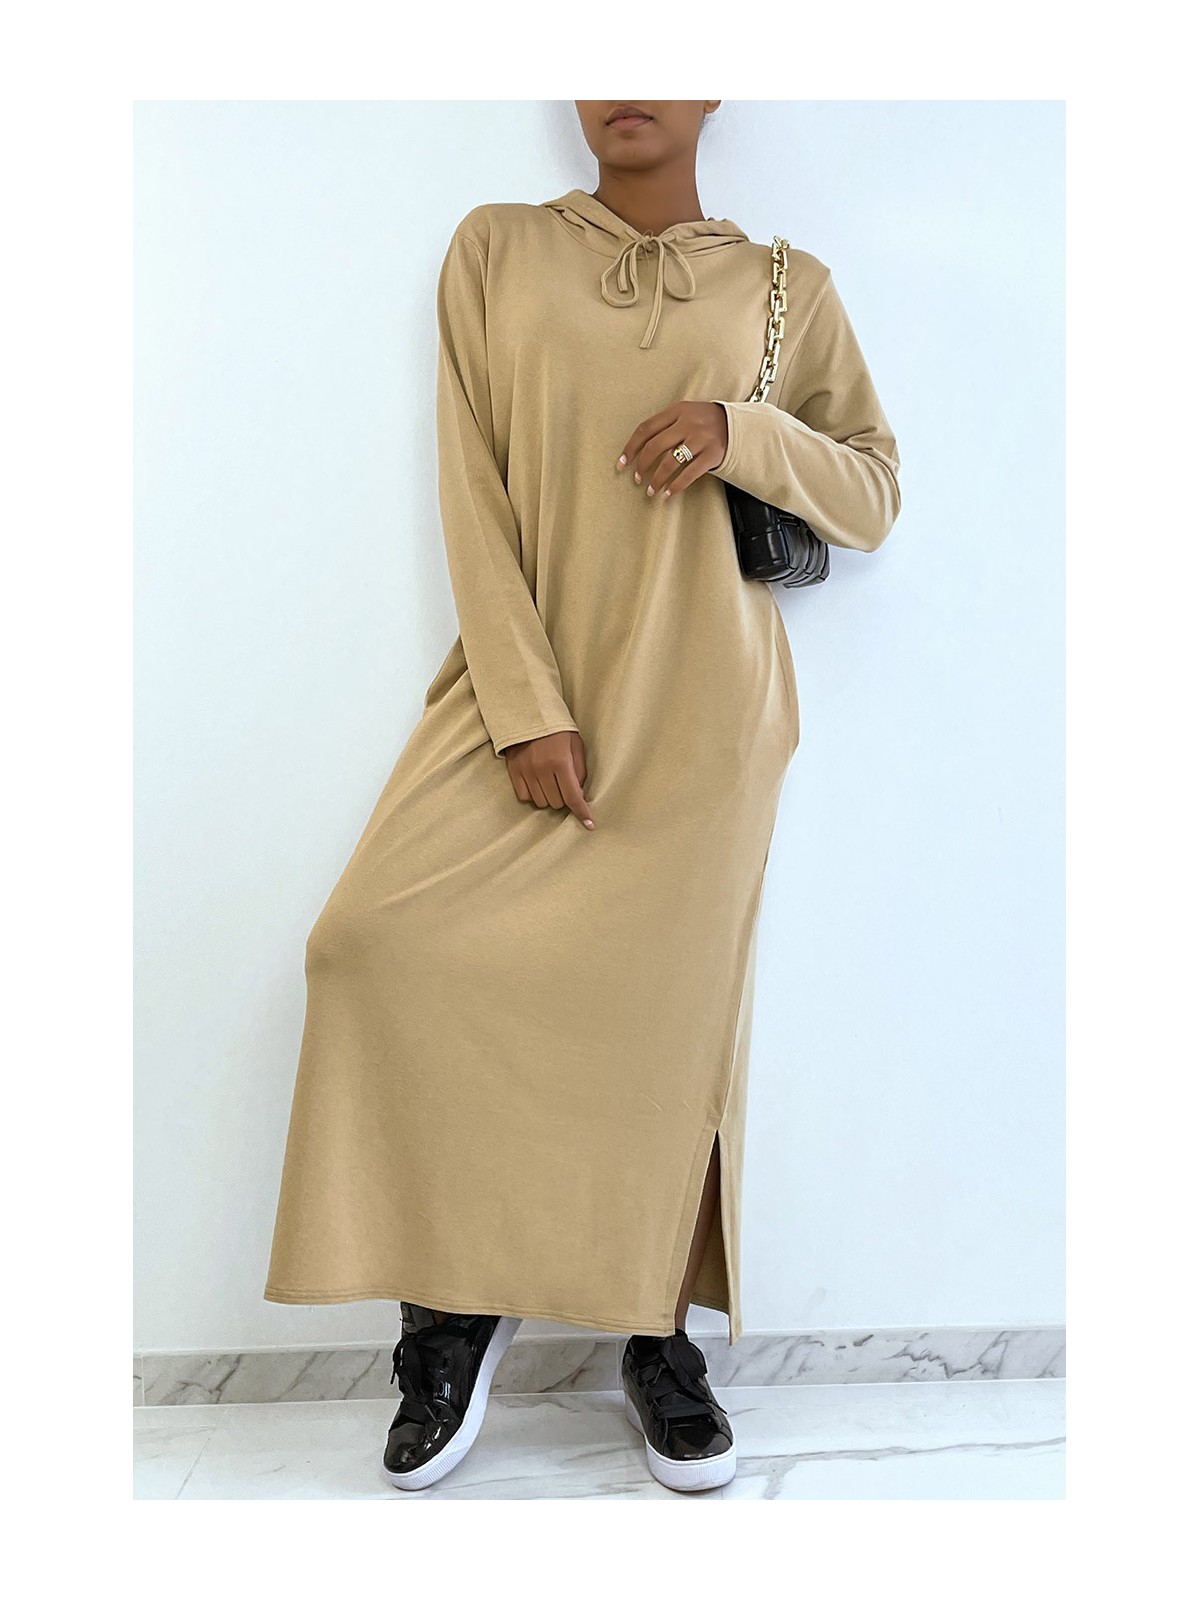 Longue robe sweat abaya camel à capuche - 5